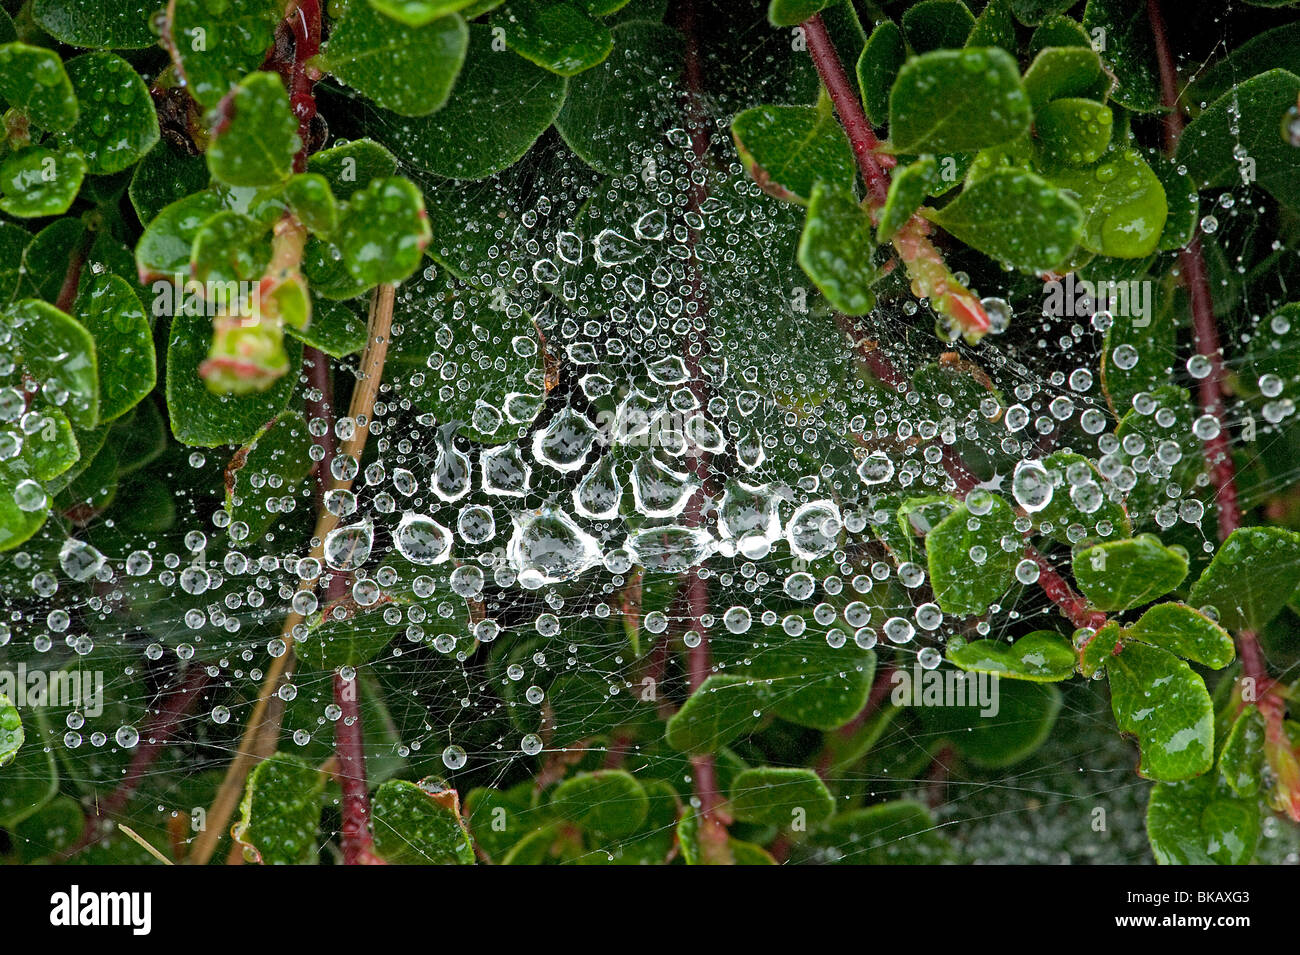 Raindrops on spiders web on cowberry, Vaccinium vitis-idaea Stock Photo